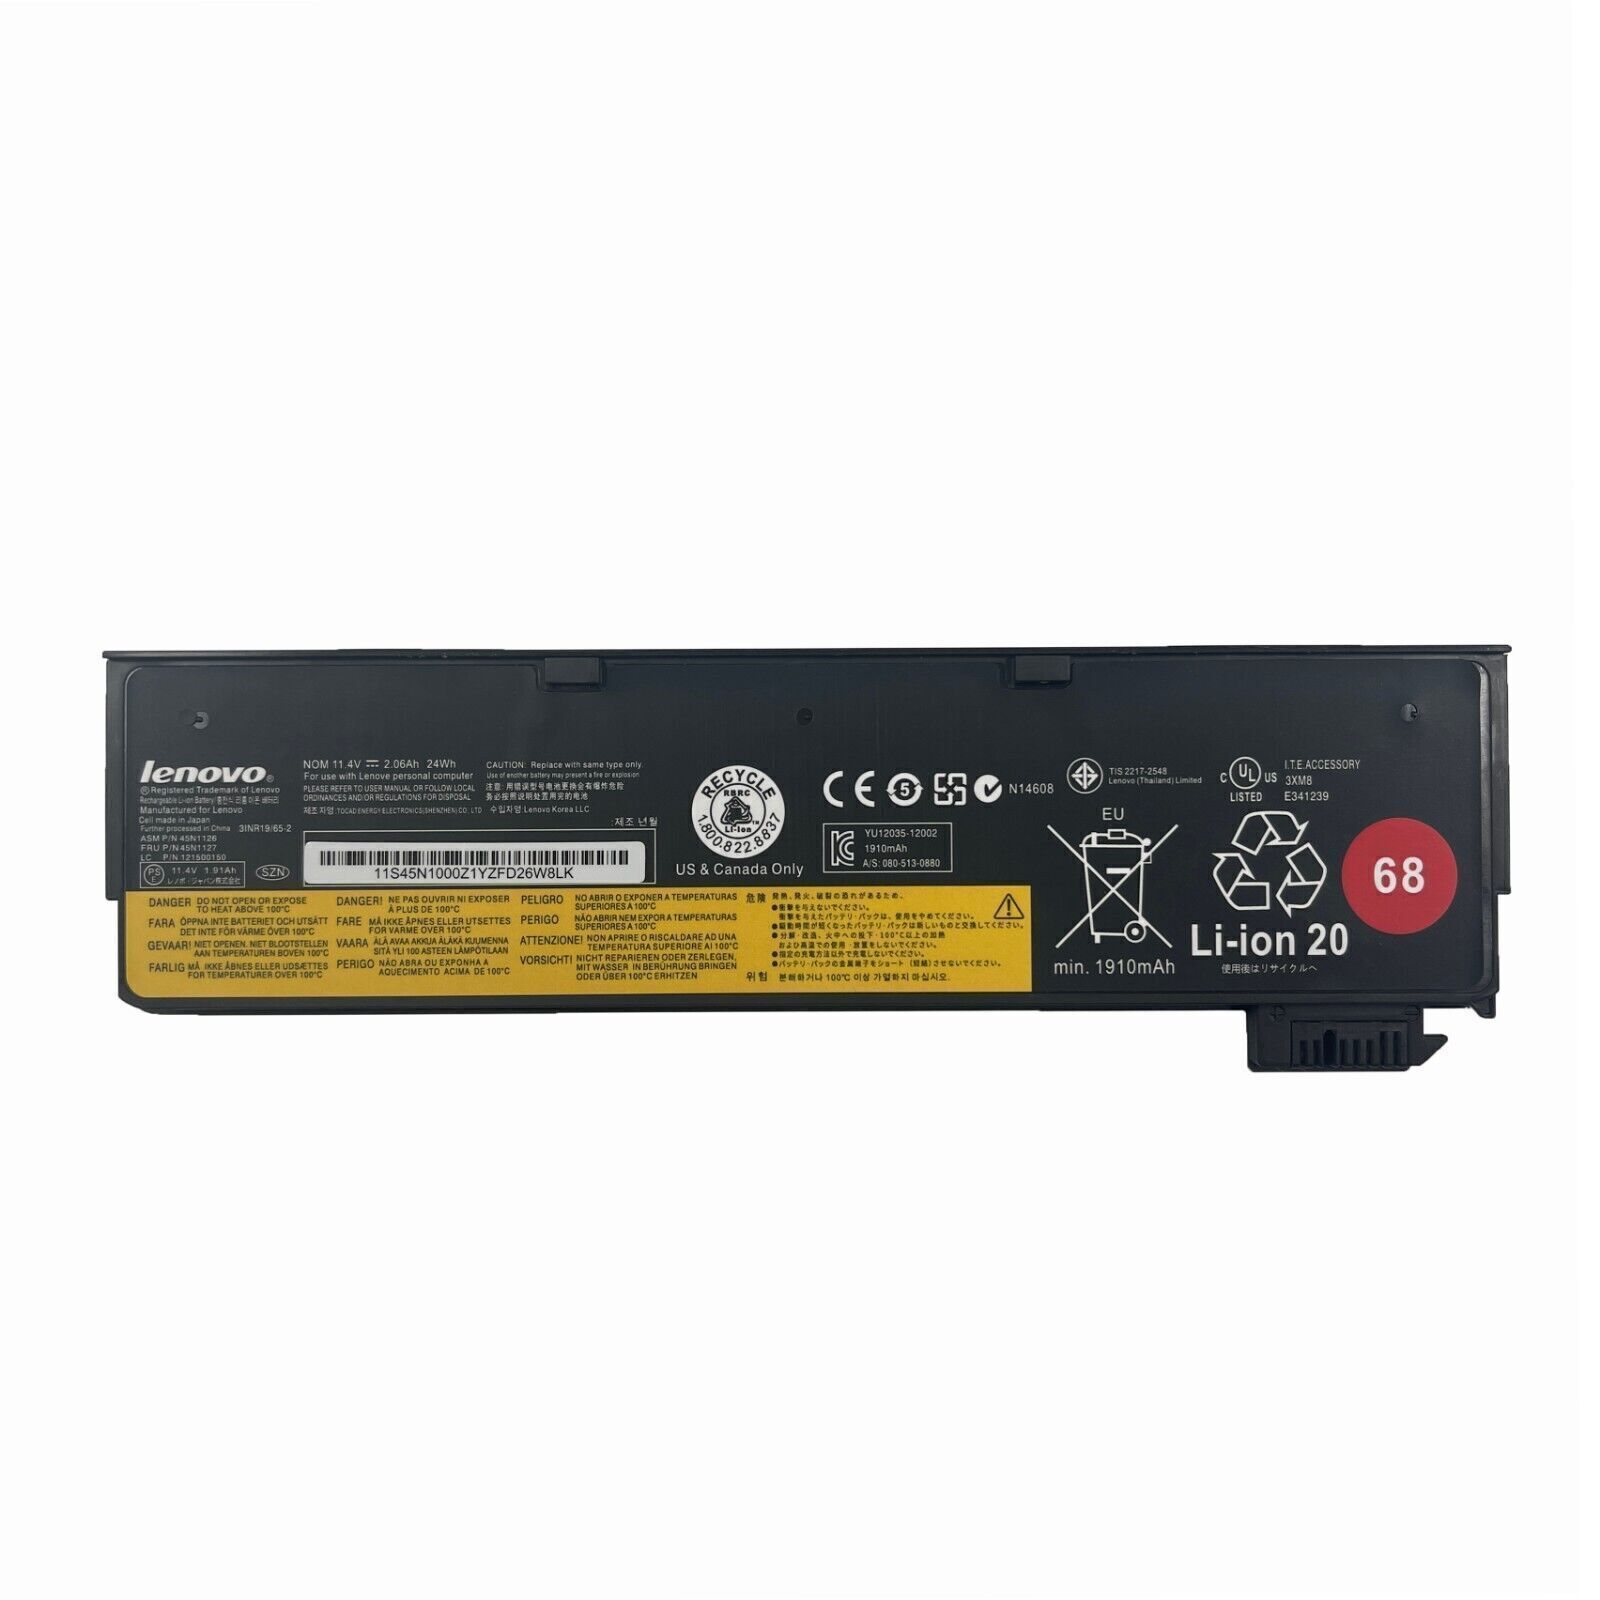 68 Genuine OEM Battery For Lenovo Thinkpad X240 X240S X250 X260 T440 T440S T450S